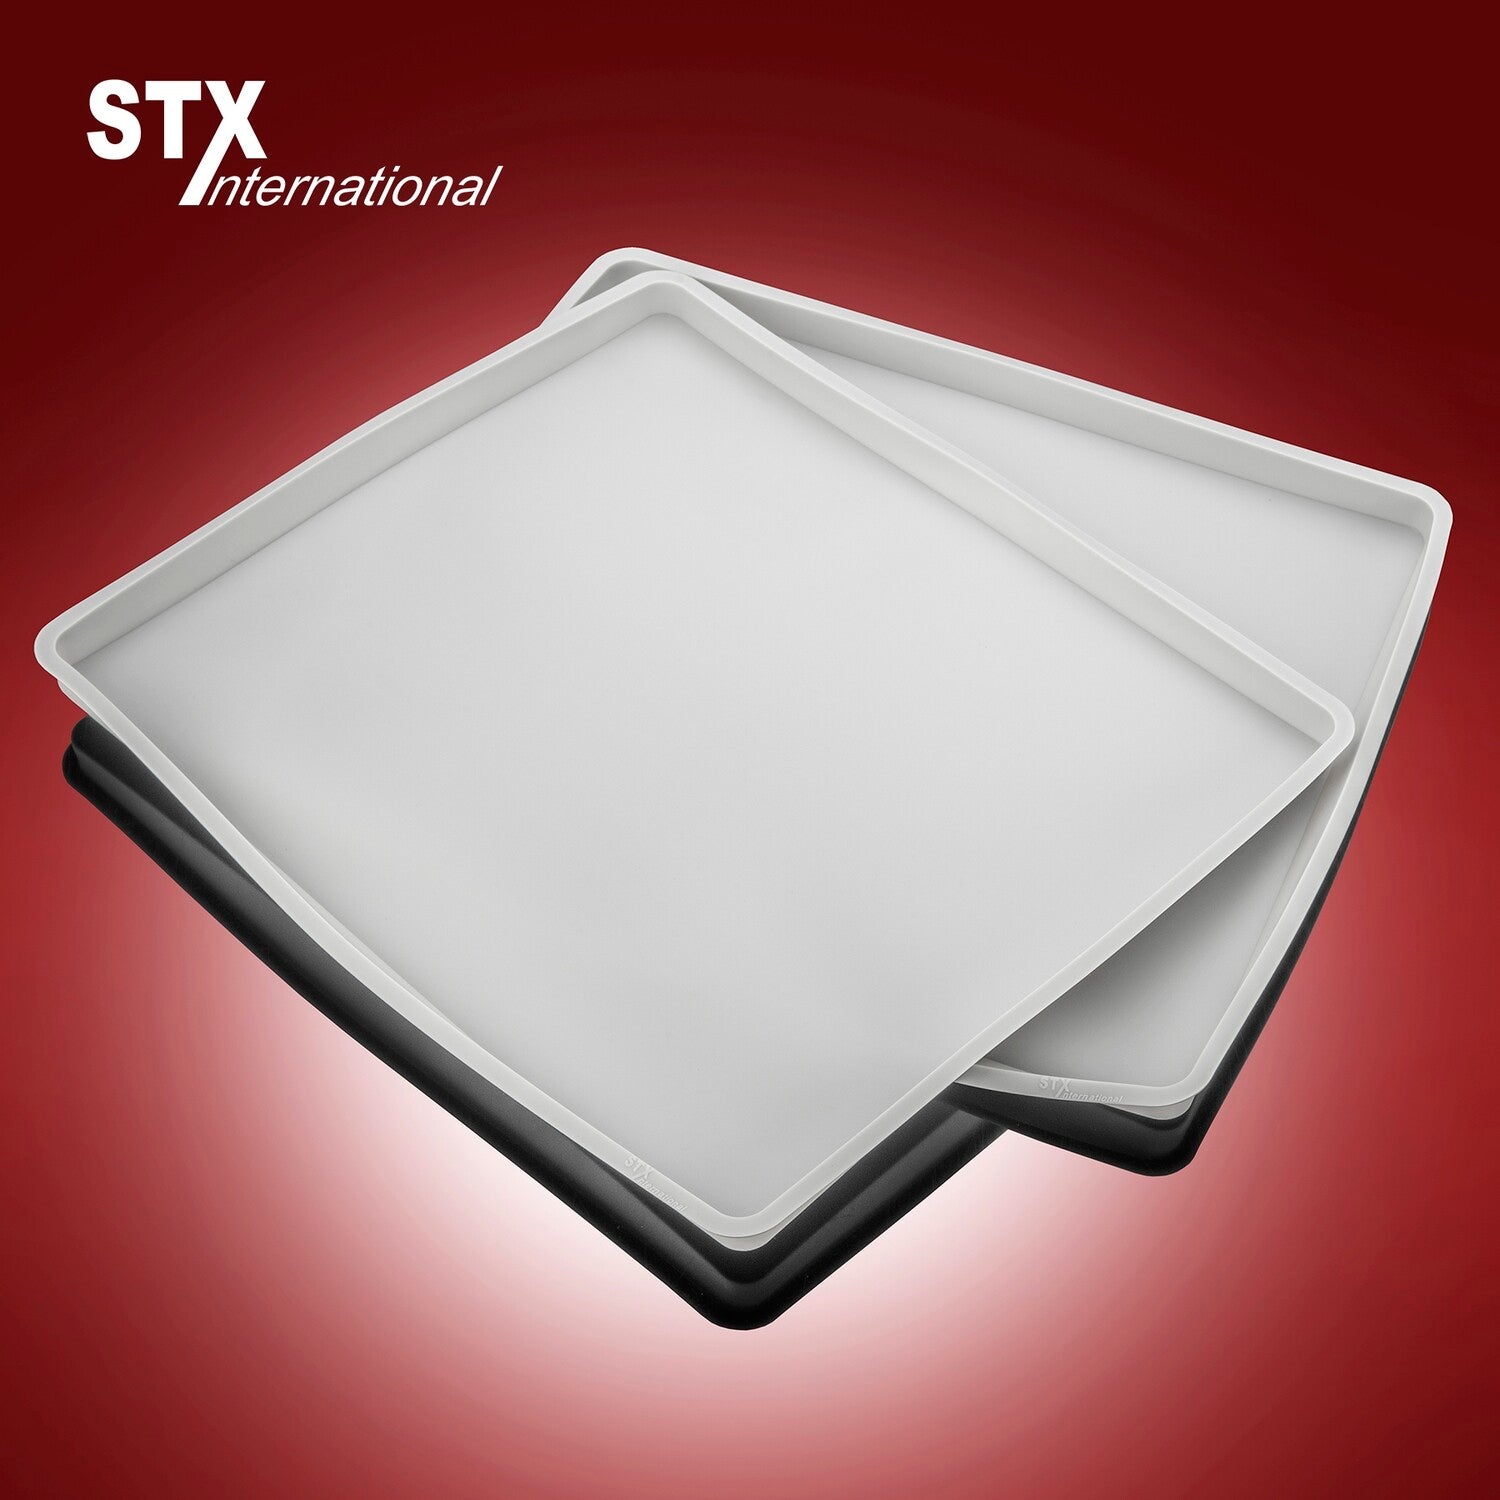 Dehydra 1200W Stainless Steel Food Dehydrator 10-Tray 165°F Jerky Safe Design